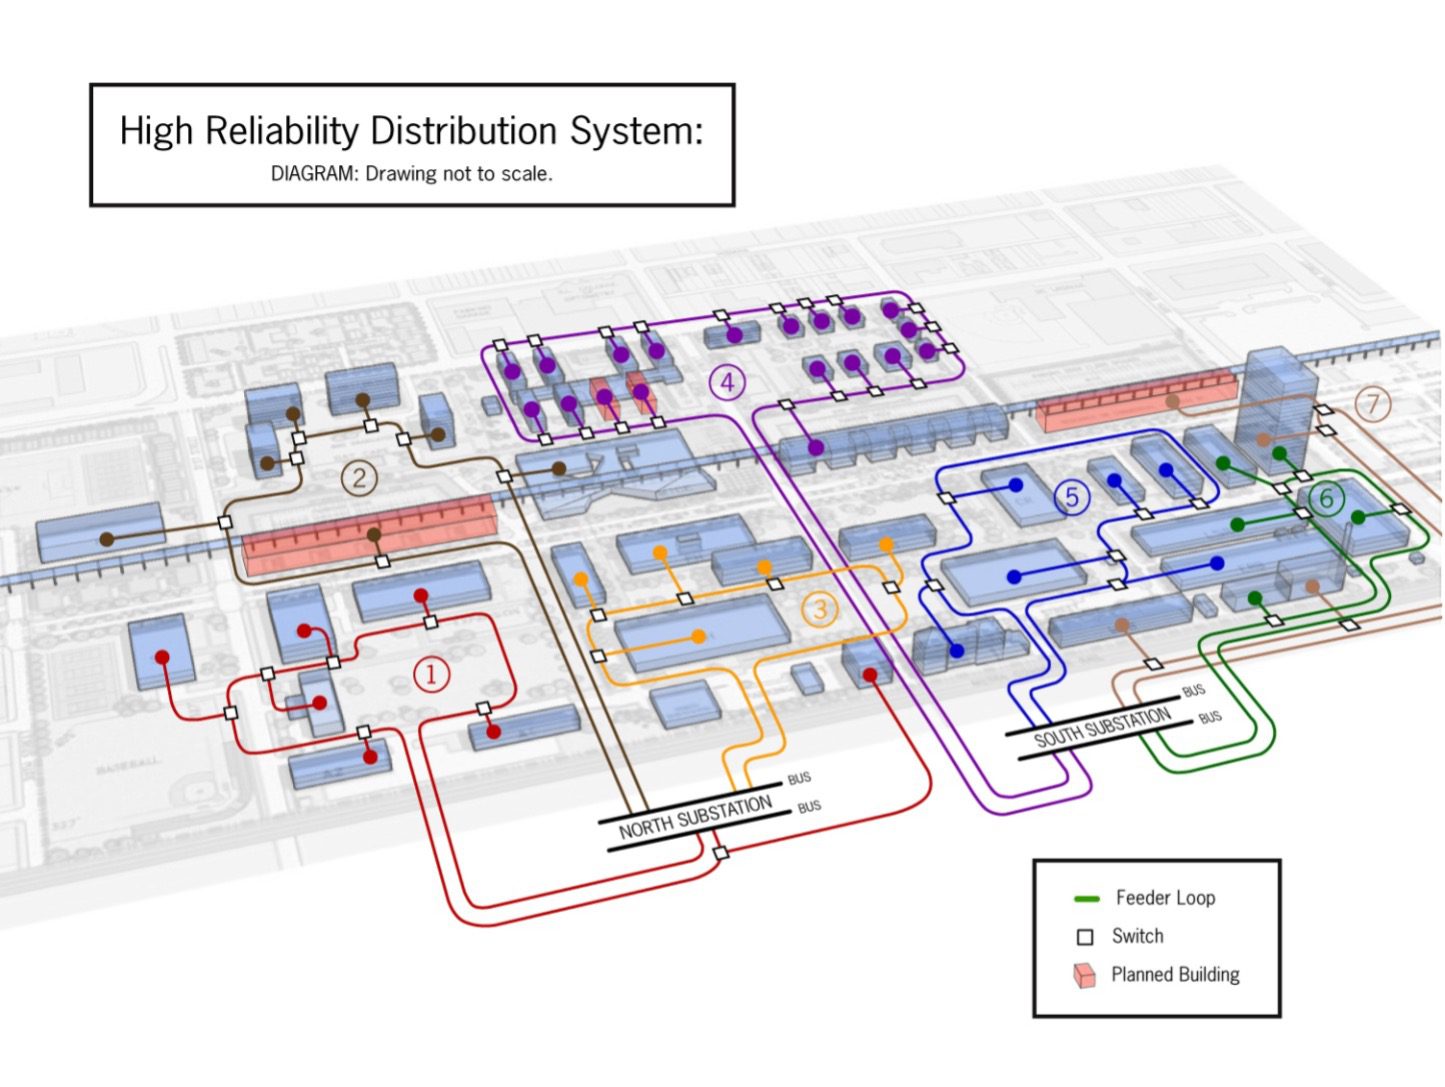 Figure 1 - High Reliability Distribution Concept